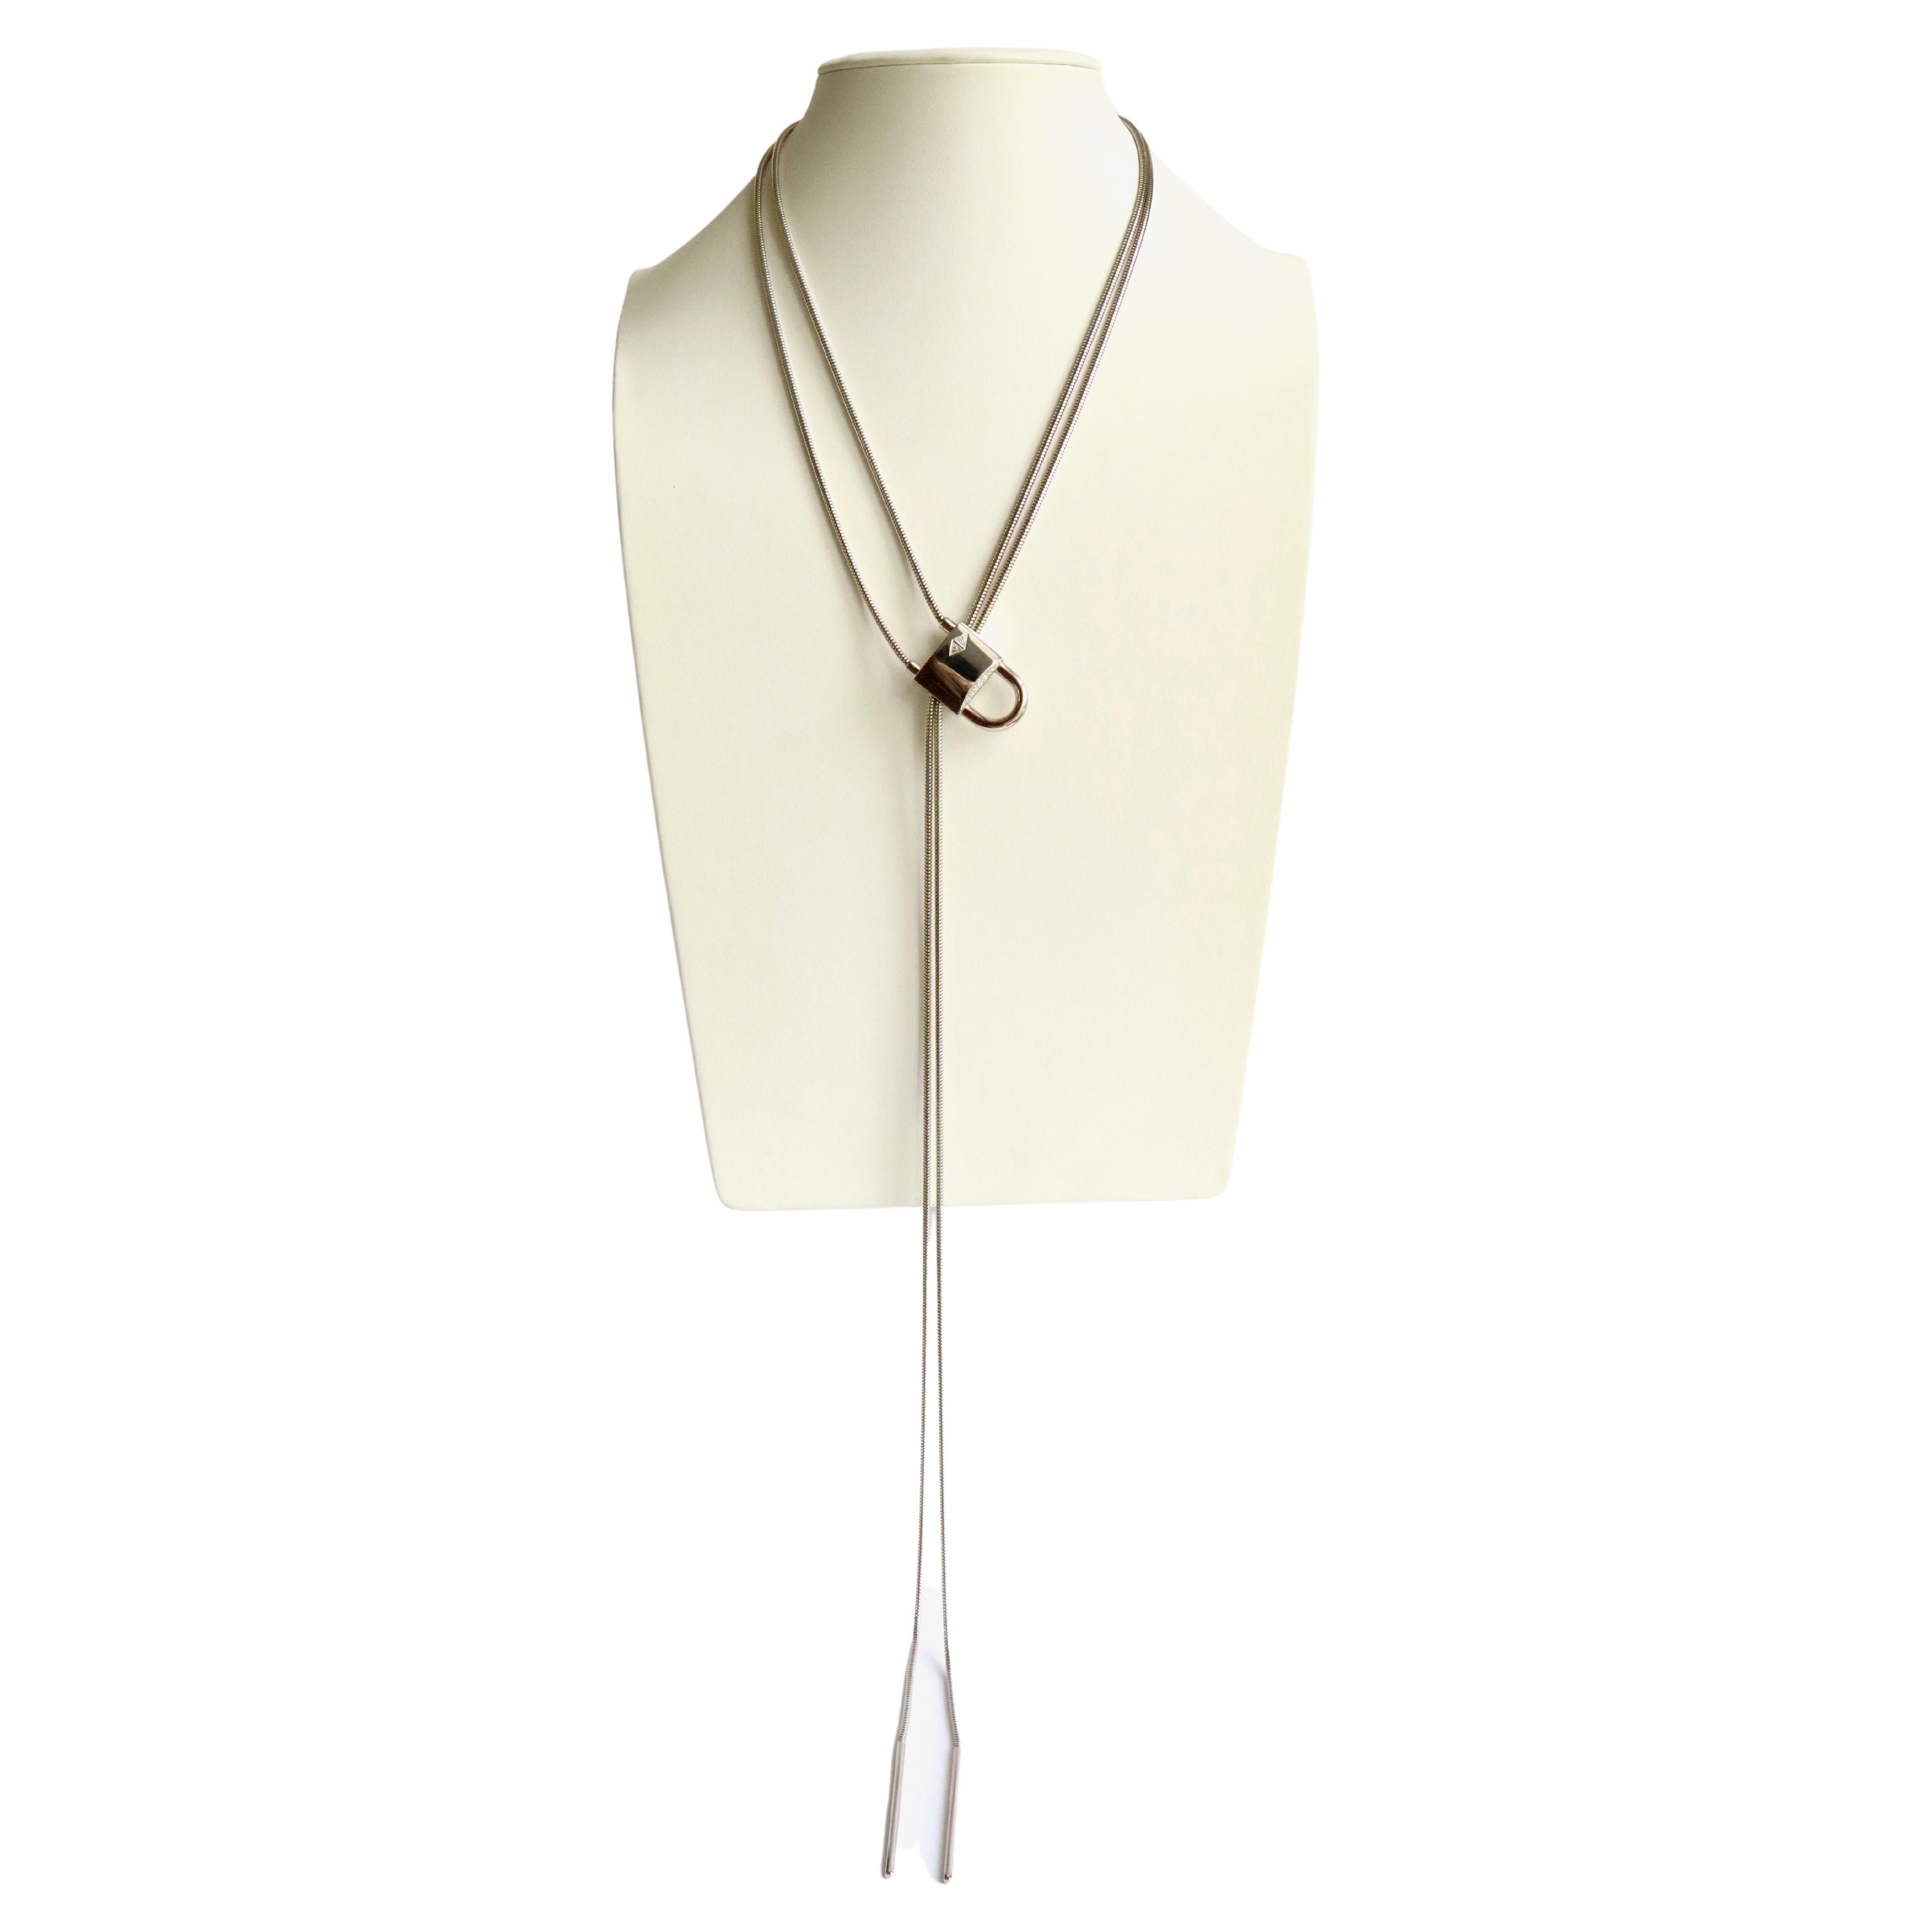 Van Cleef & Arpels Sautoir Cadenas Long Necklace in 18 Kt Gold and Diamonds